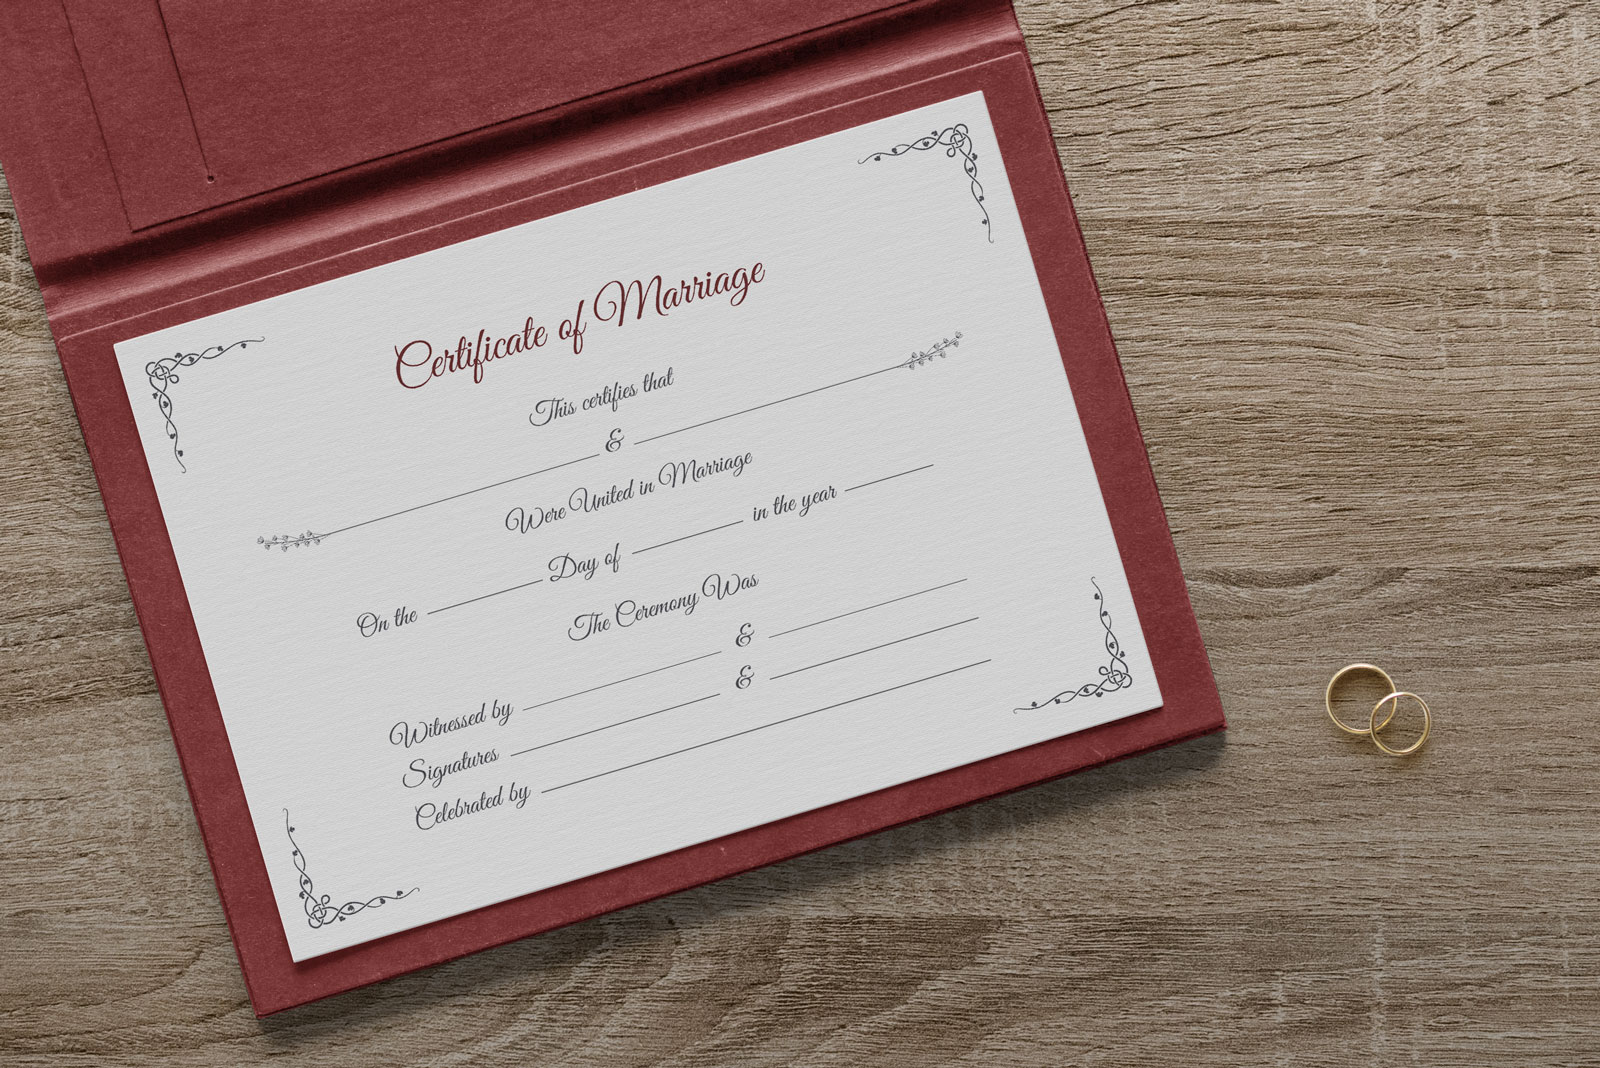 Free-Wedding-Certificate-Mockup-PSD